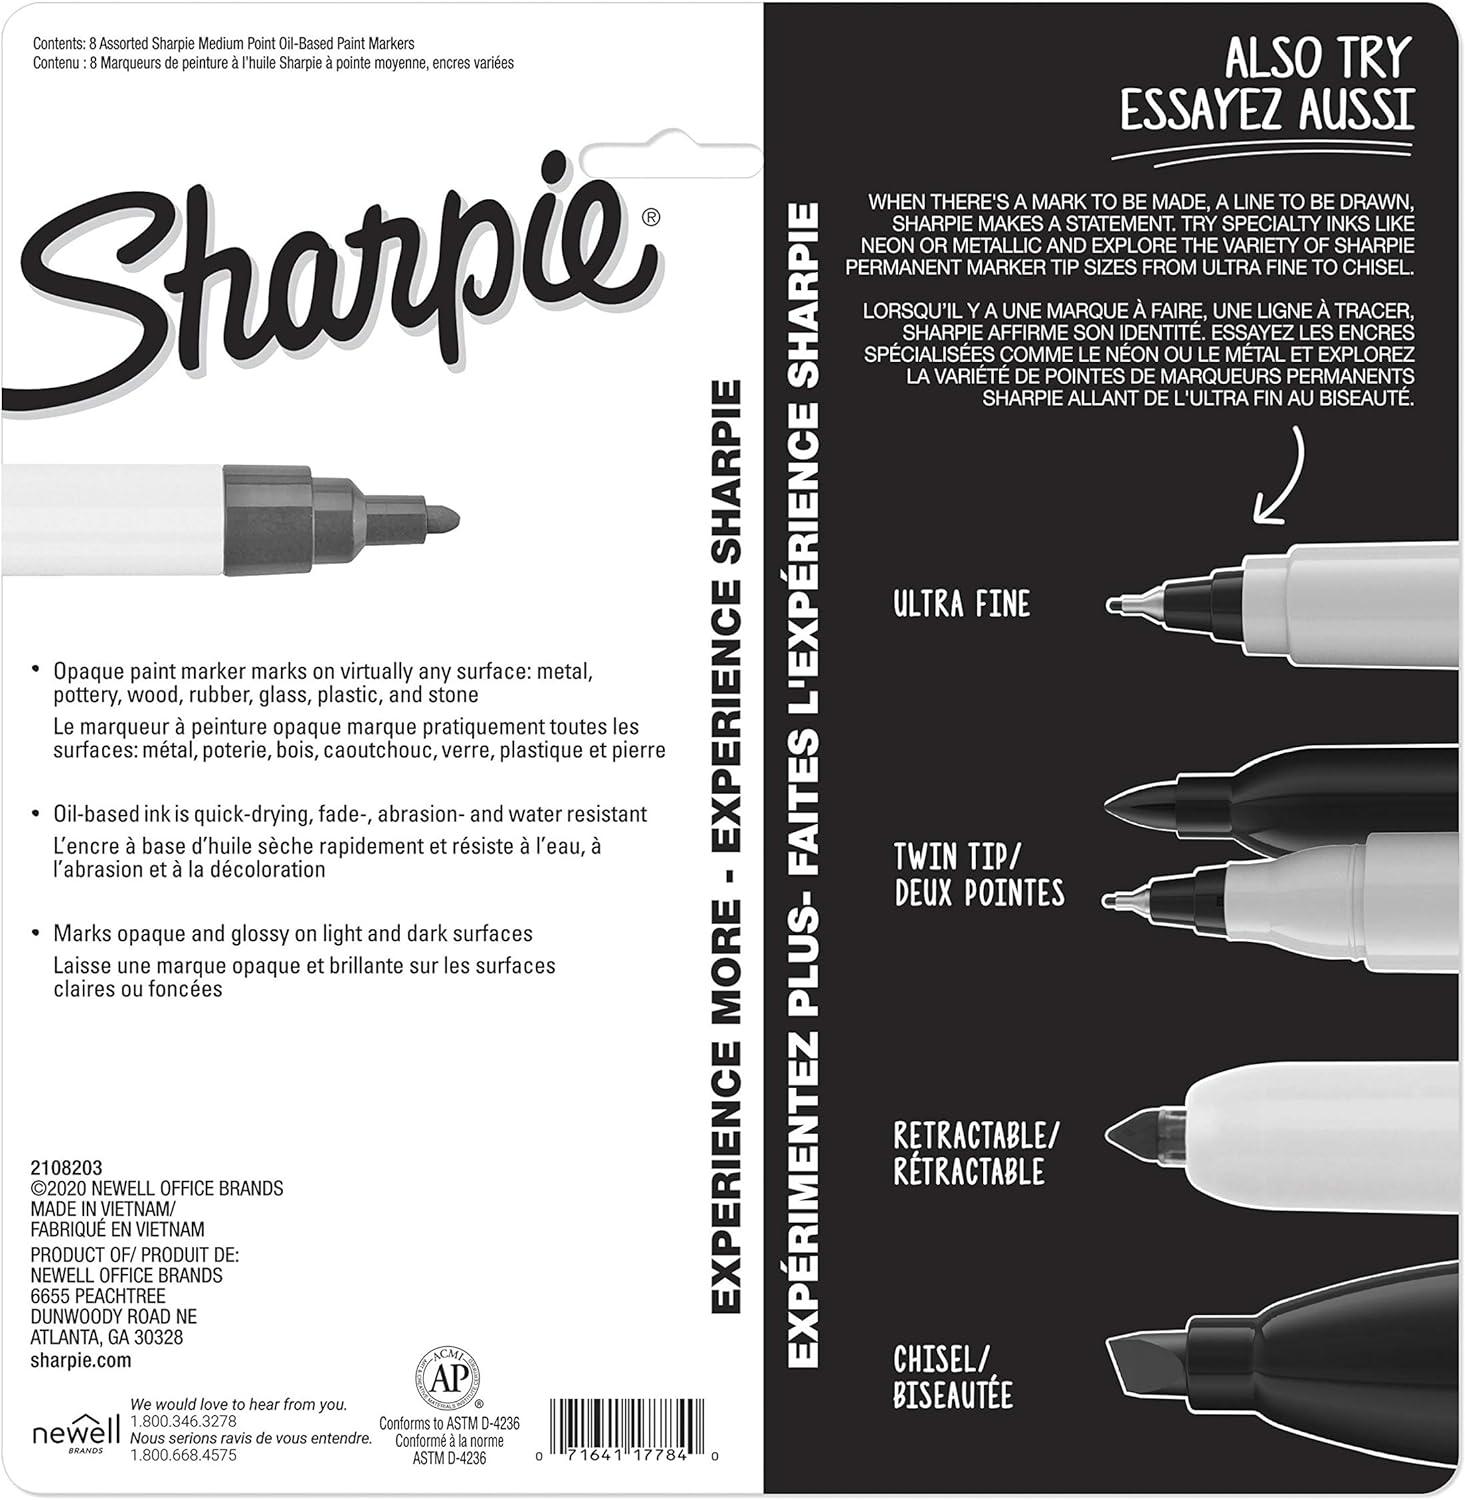 Sharpie Marker, Paint, Oil-Based, Medium Point